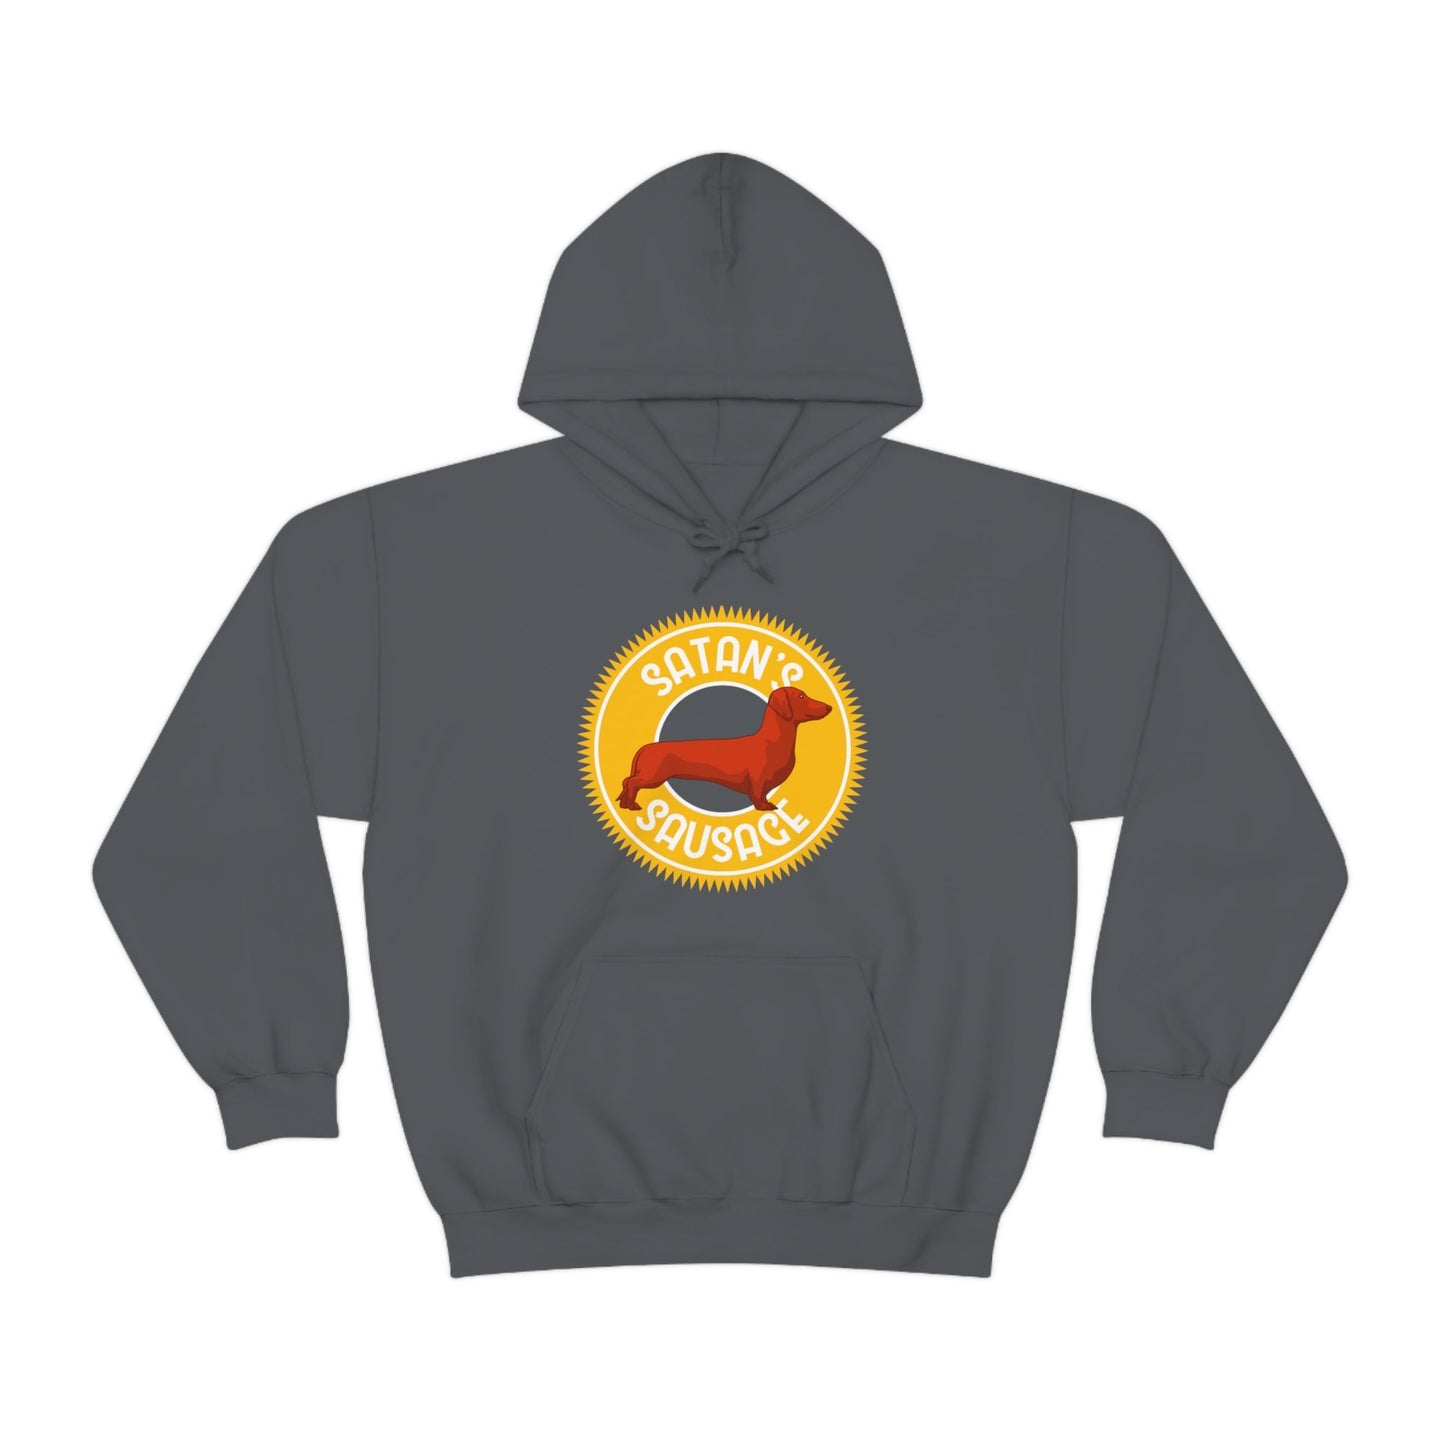 Satan's Sausage | Hooded Sweatshirt - Detezi Designs-22125087438881781405